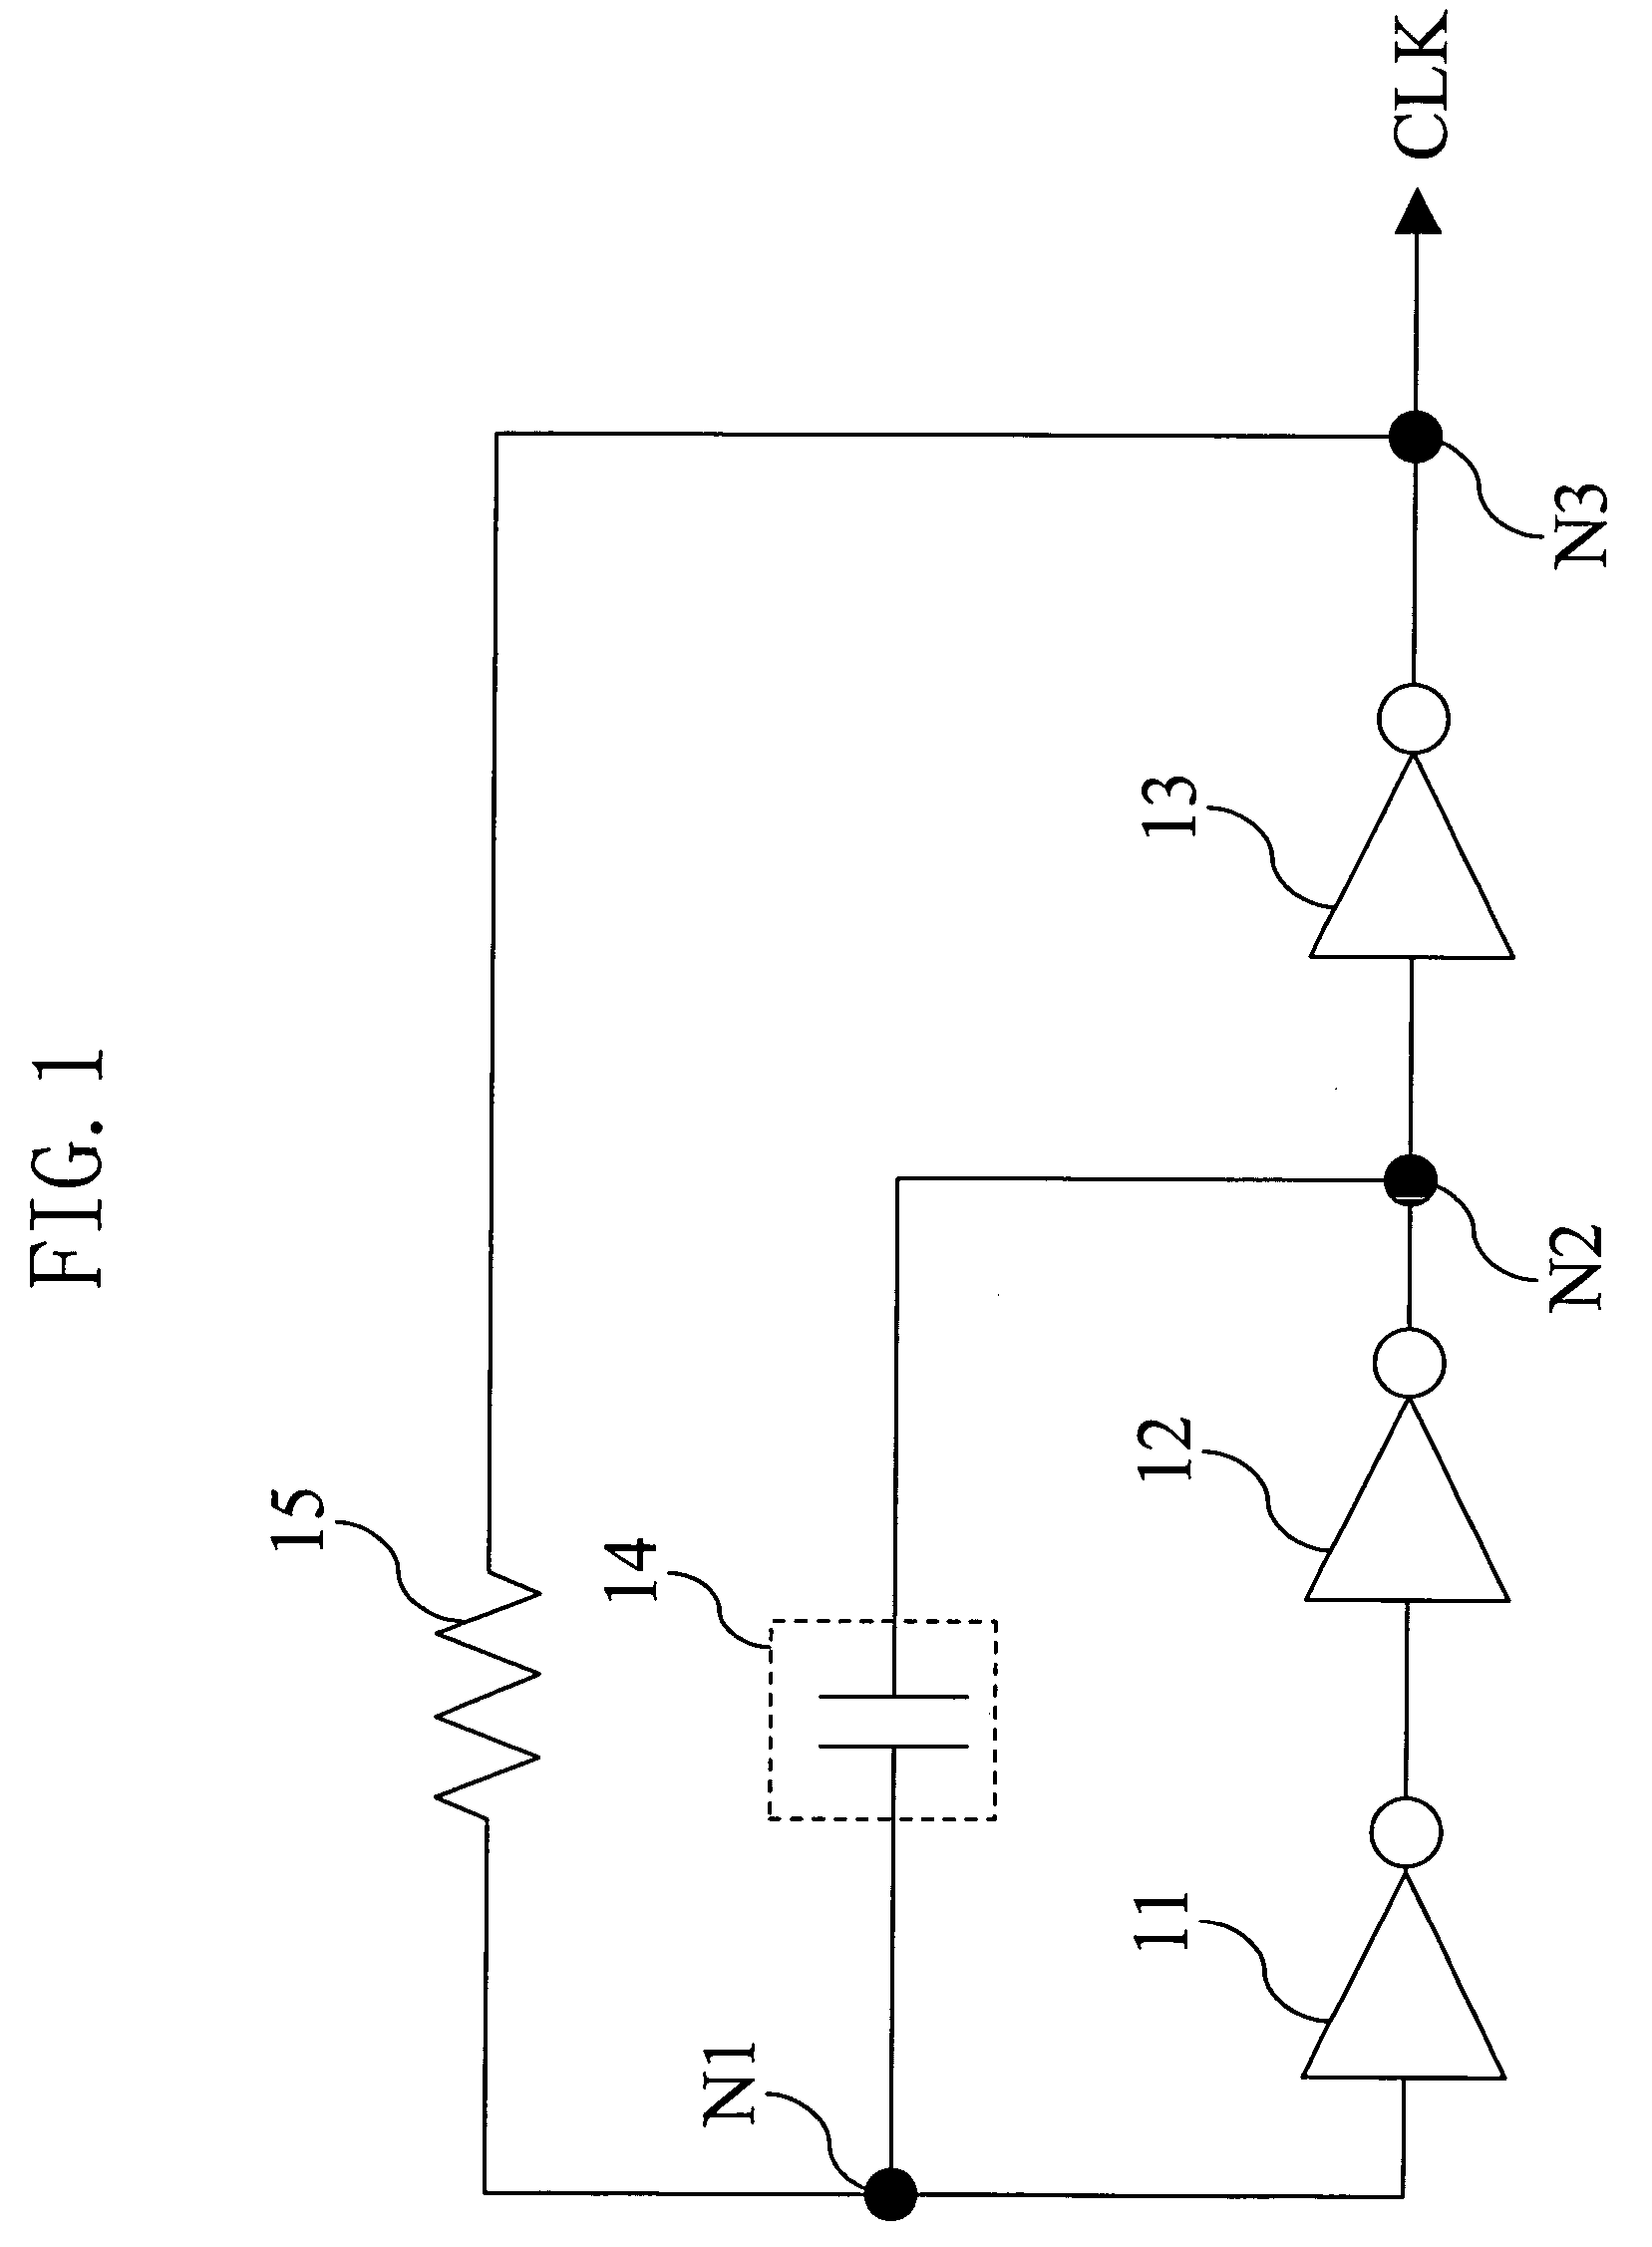 CR oscillation circuit